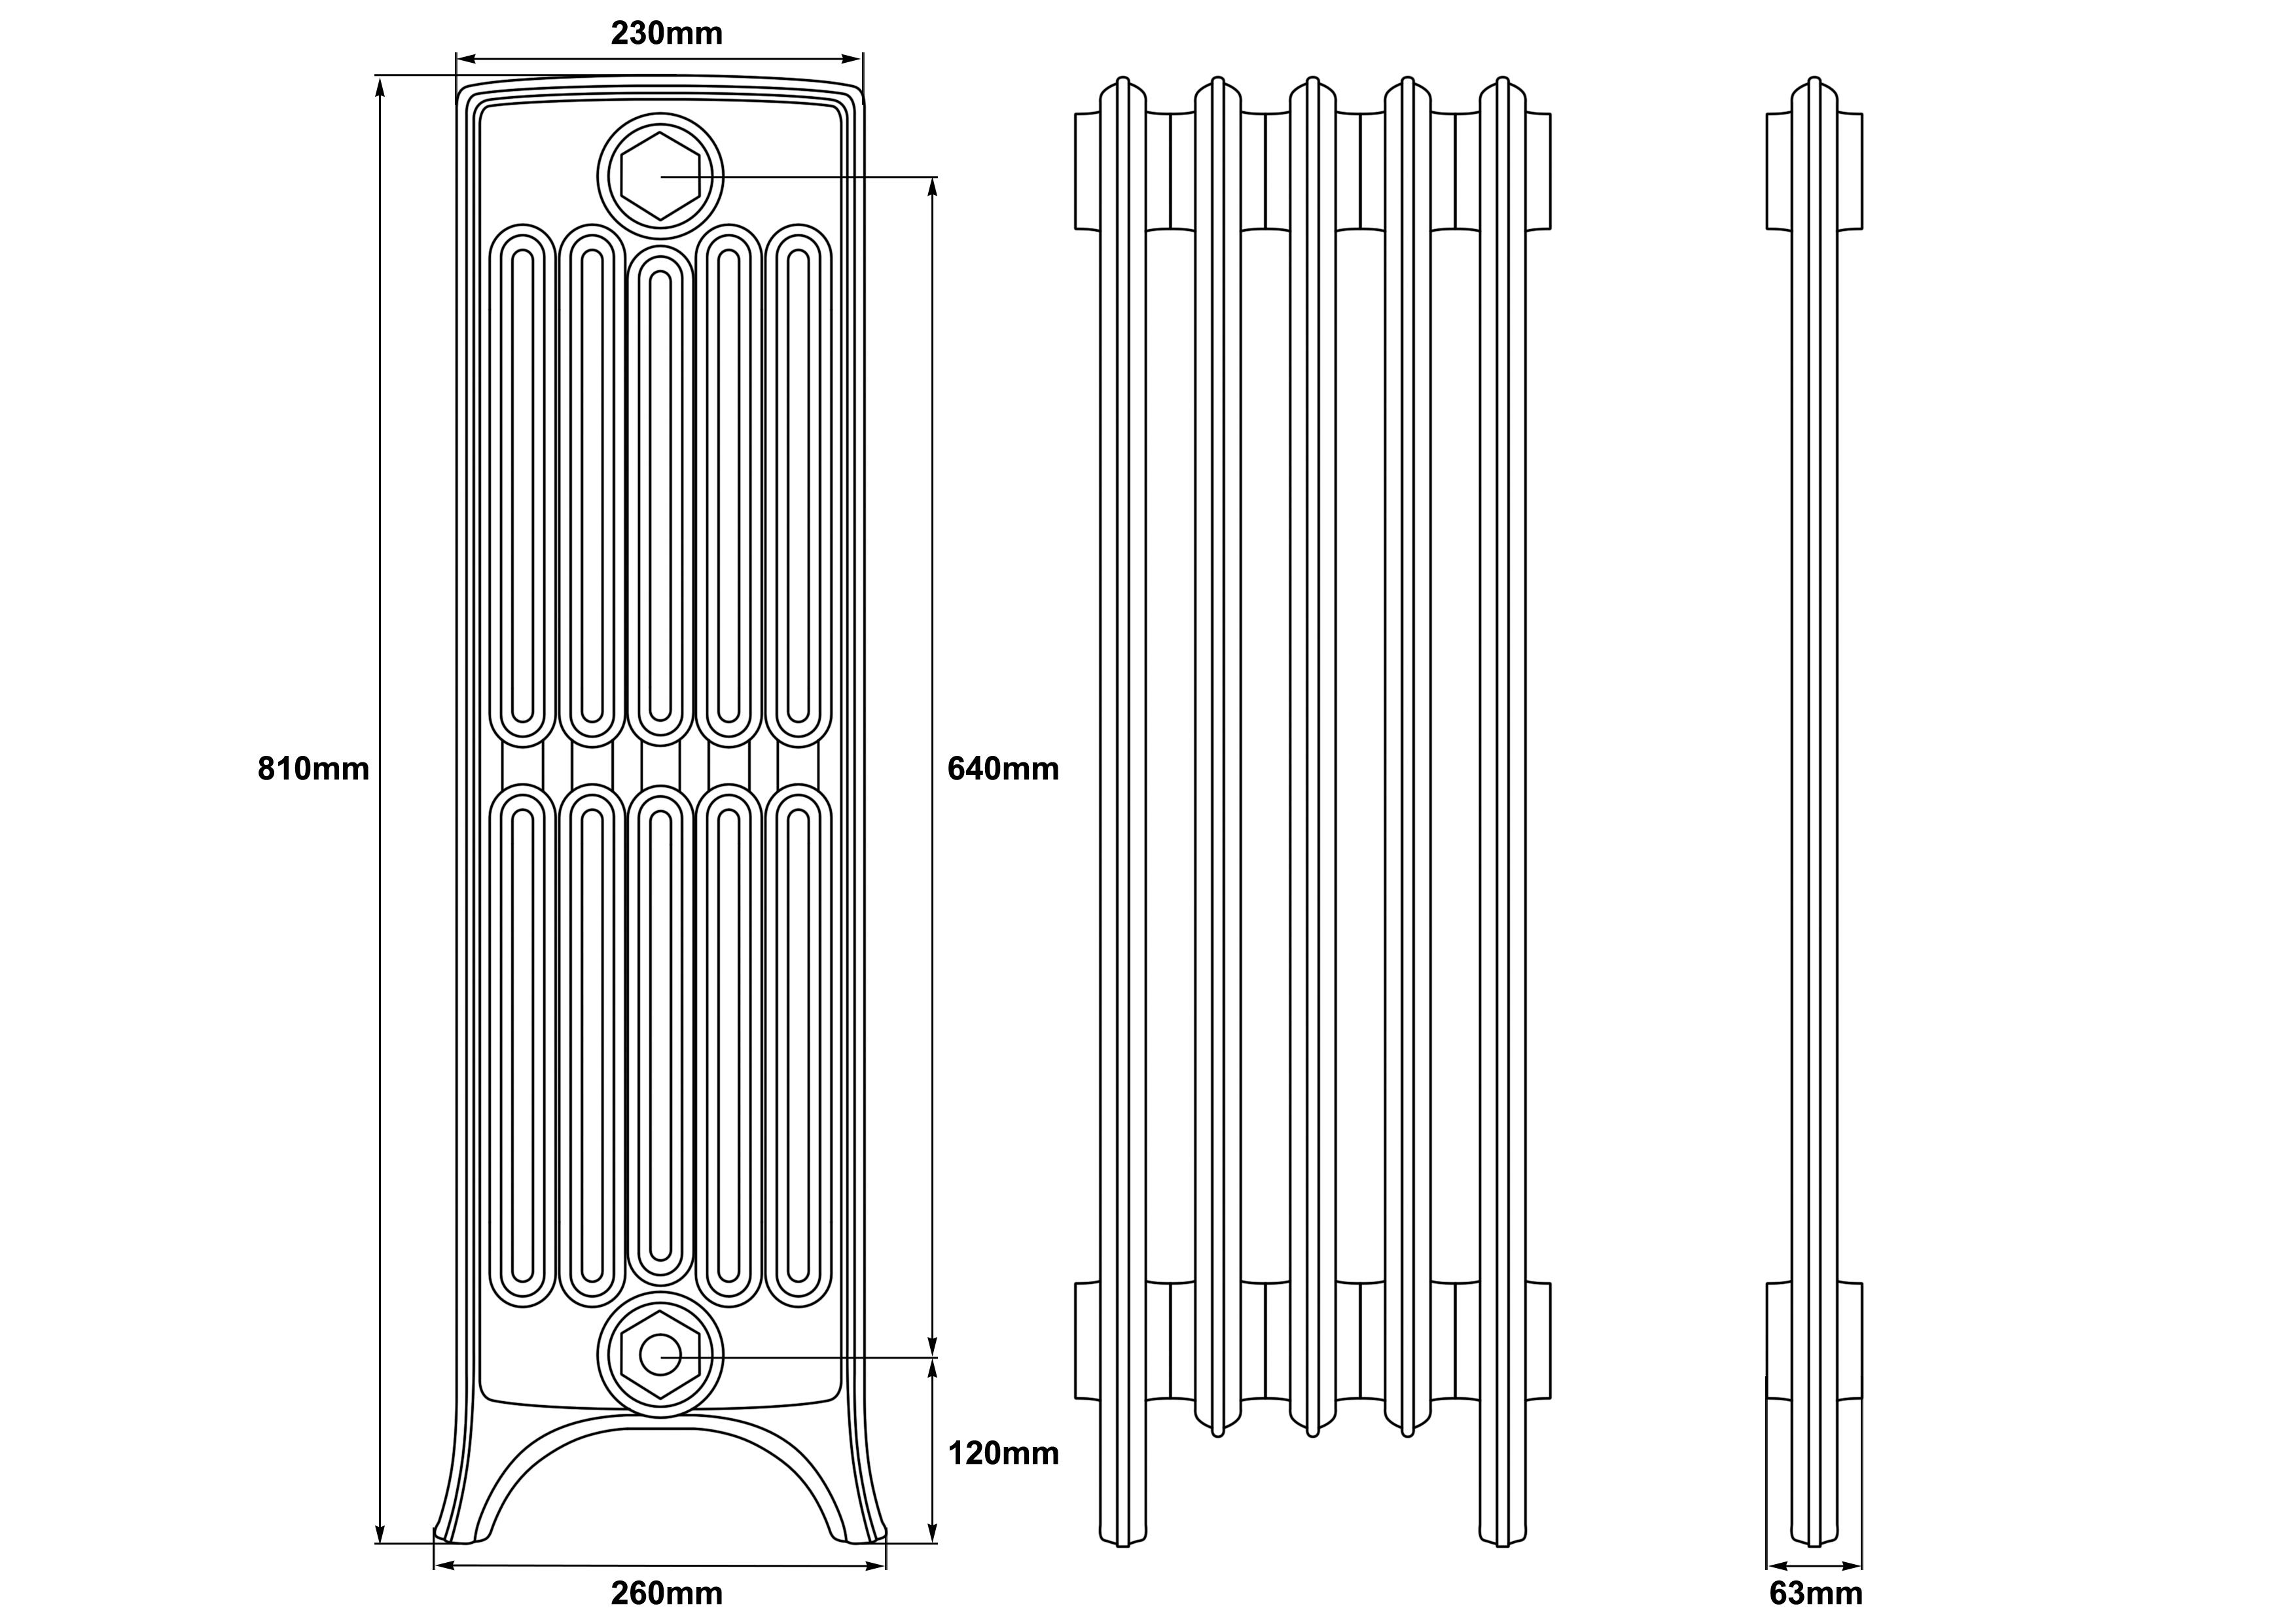 rathmell 810mm 6 column radiator dimensions